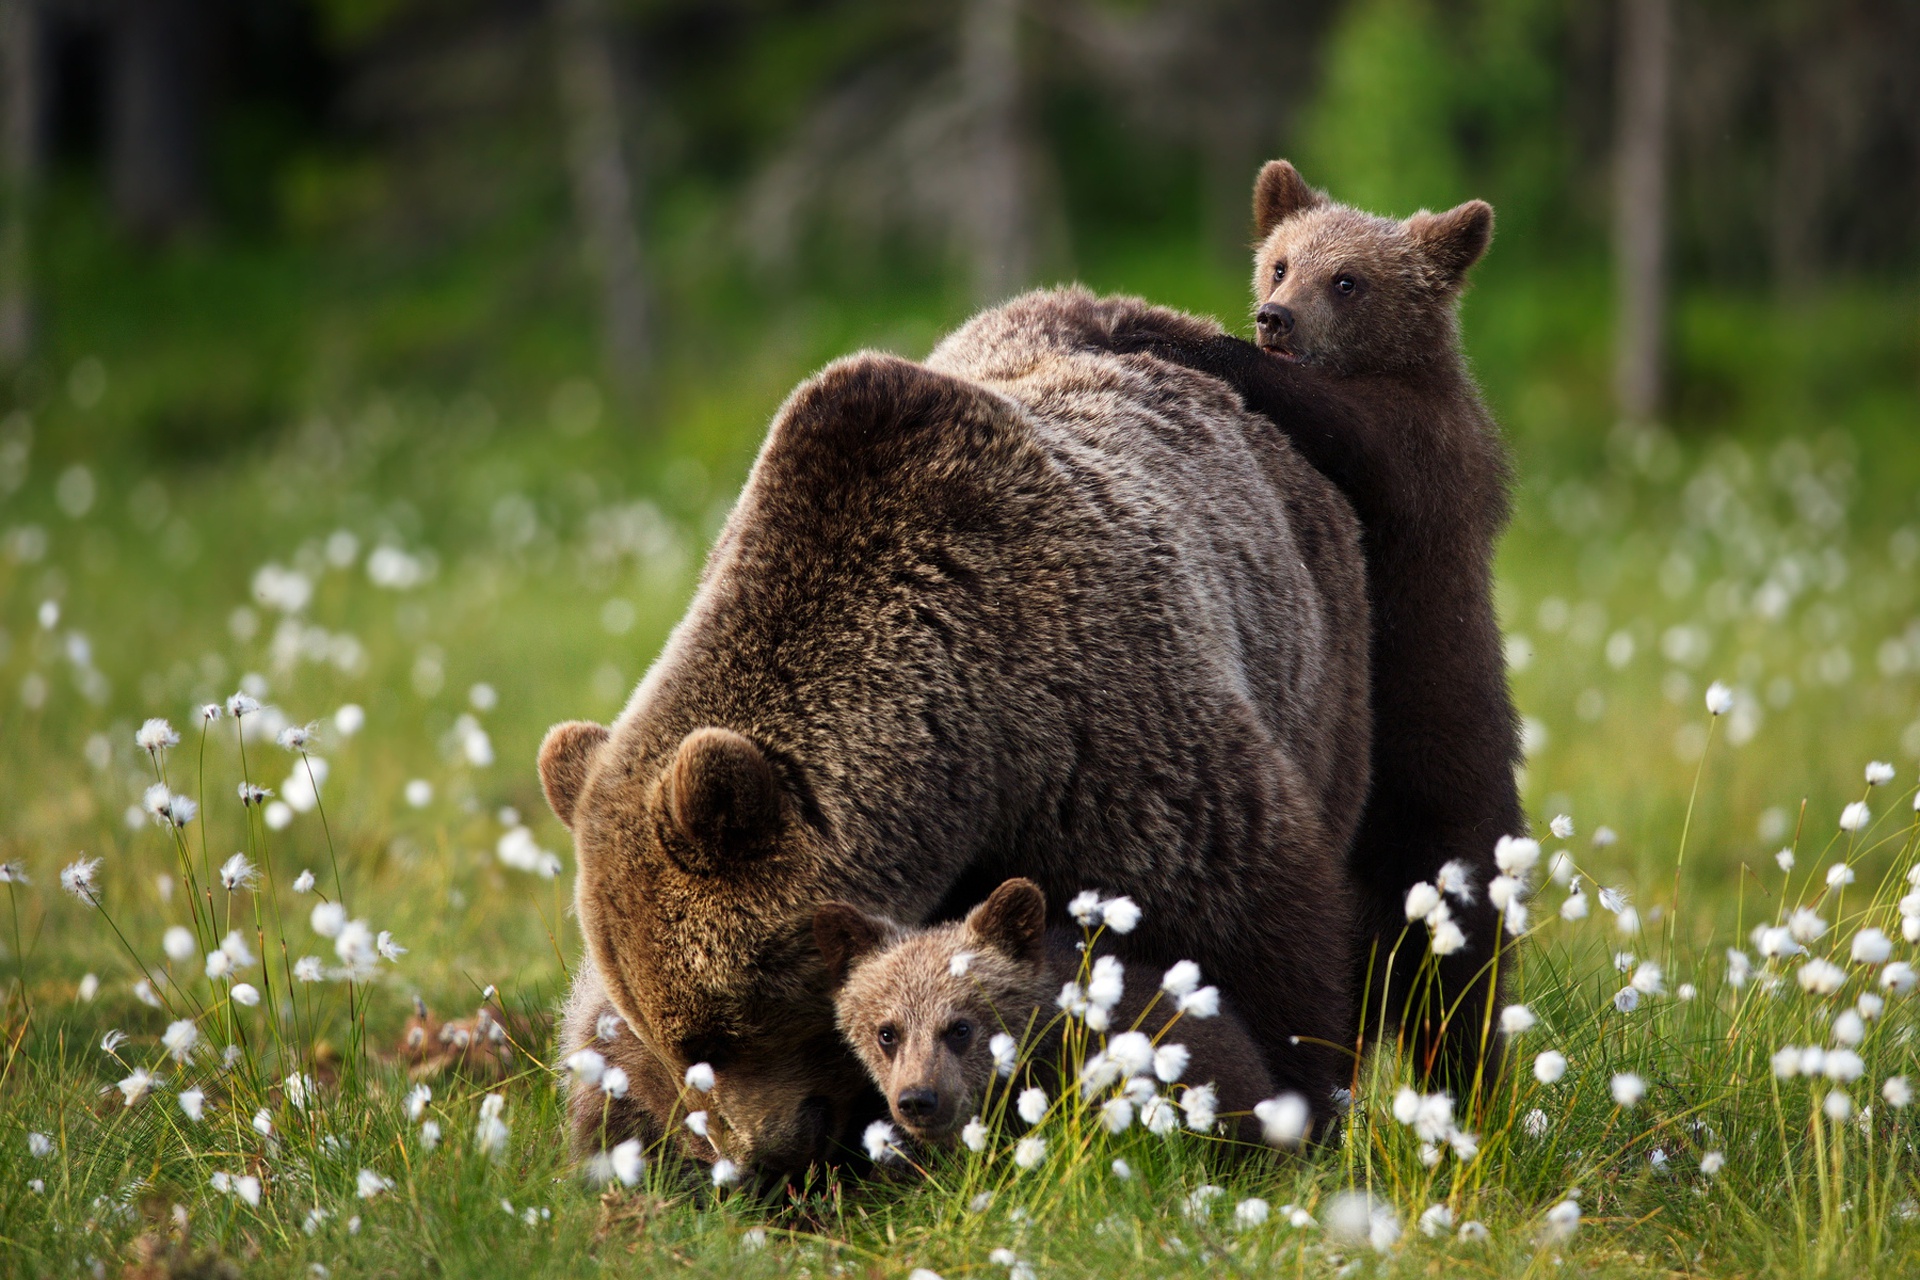 Animals posting. Медведь Медвежонок медвежата Медведица. Медведица с медвежатами. Медведица с медвежатами весной. Медведь с медвежонком.